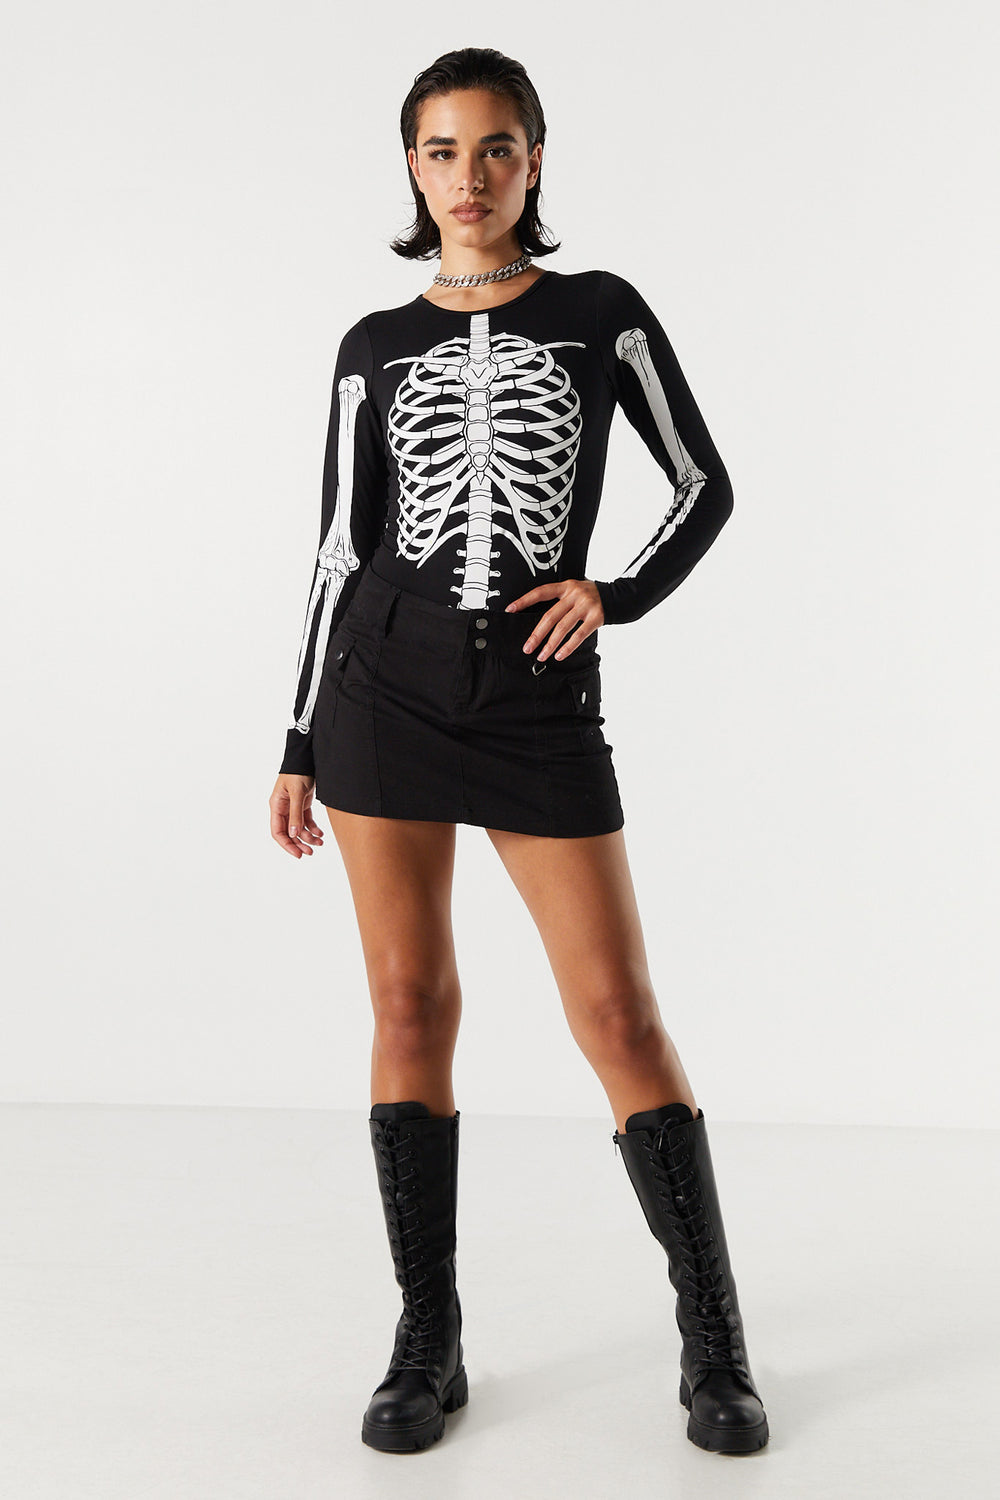 Skeleton Bodysuit Skeleton Bodysuit 5